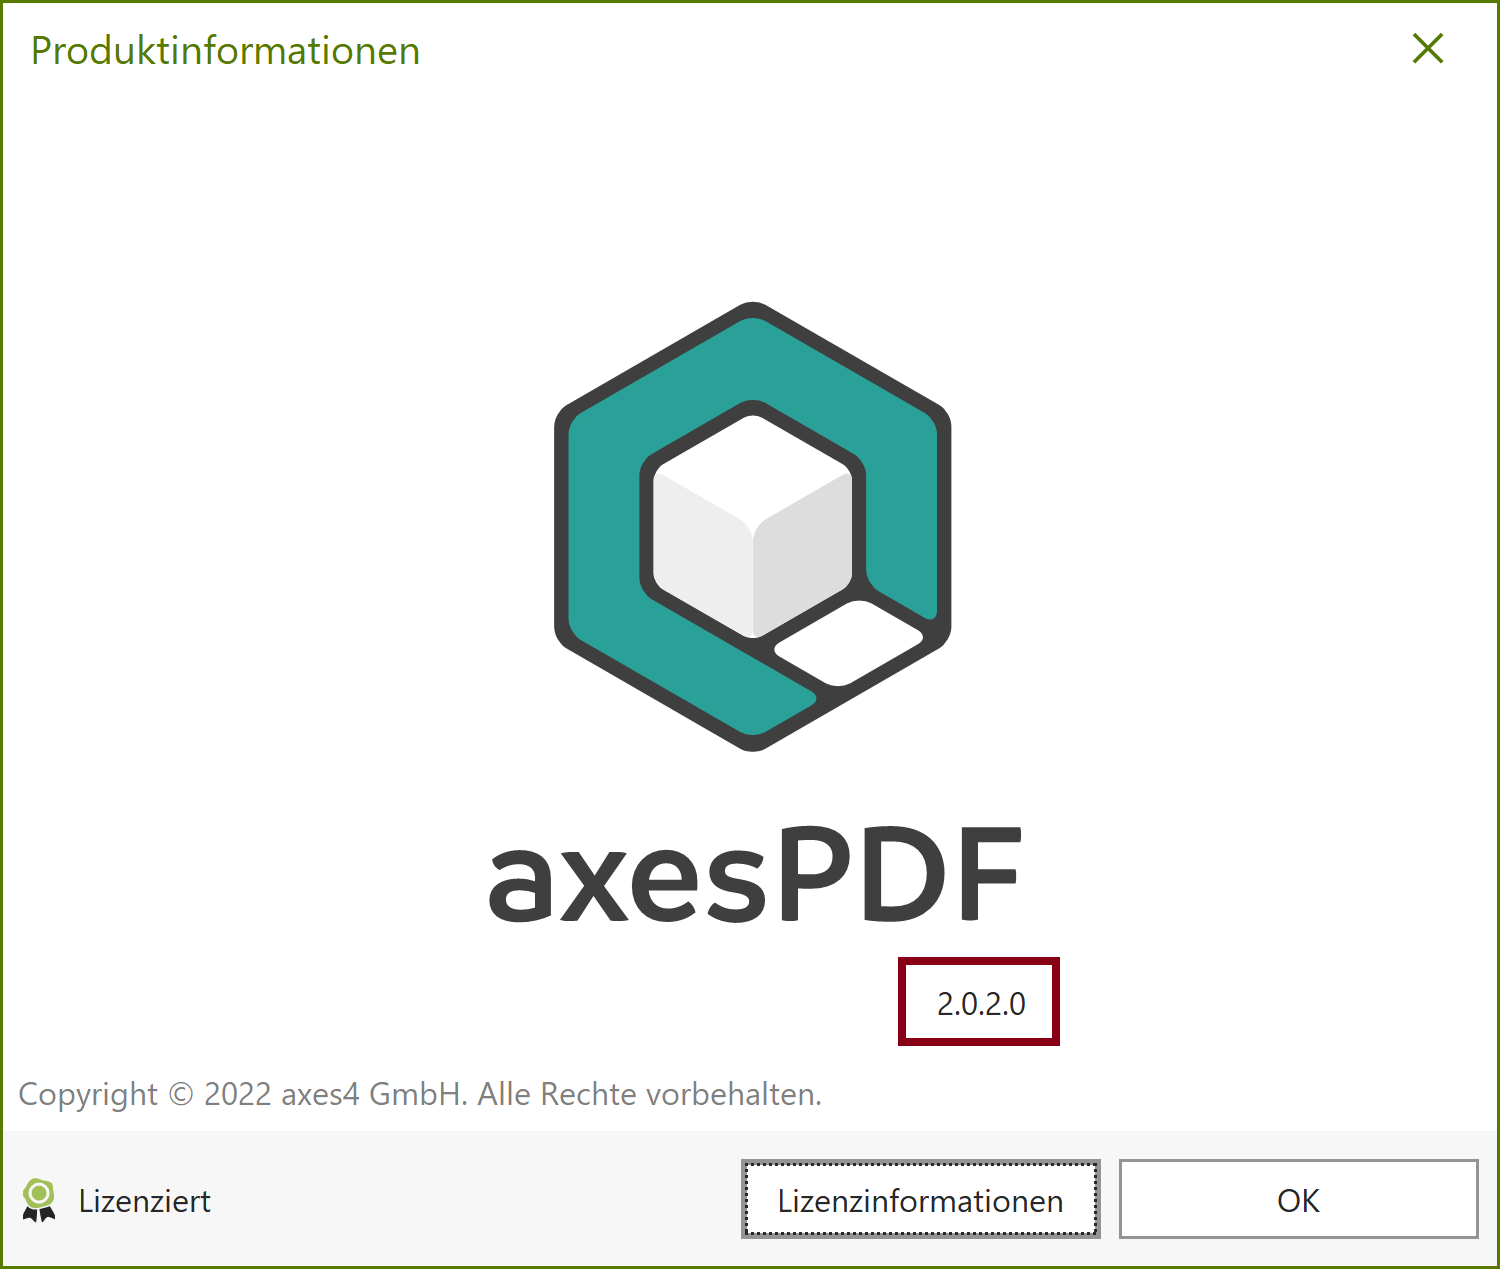 axesPDF_Produktinformationen.png